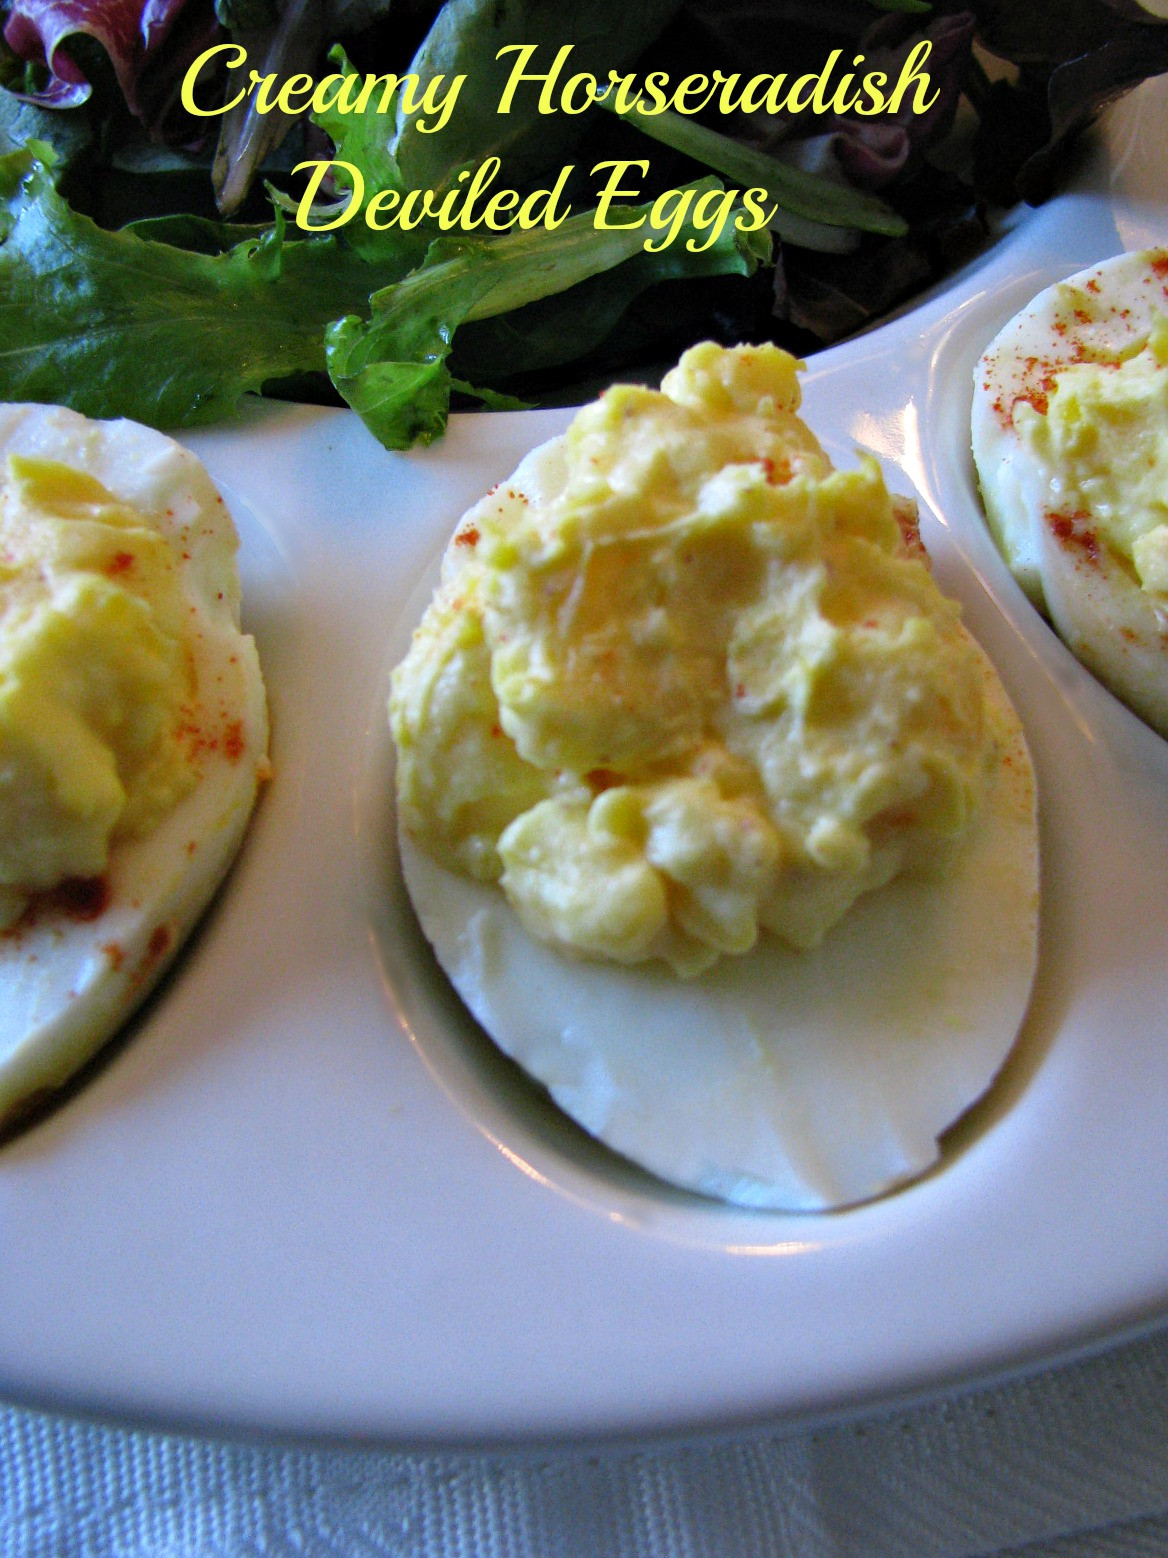 Deviled Eggs With Horseradish
 Creamy Horseradish Deviled Eggs Rants From My Crazy Kitchen